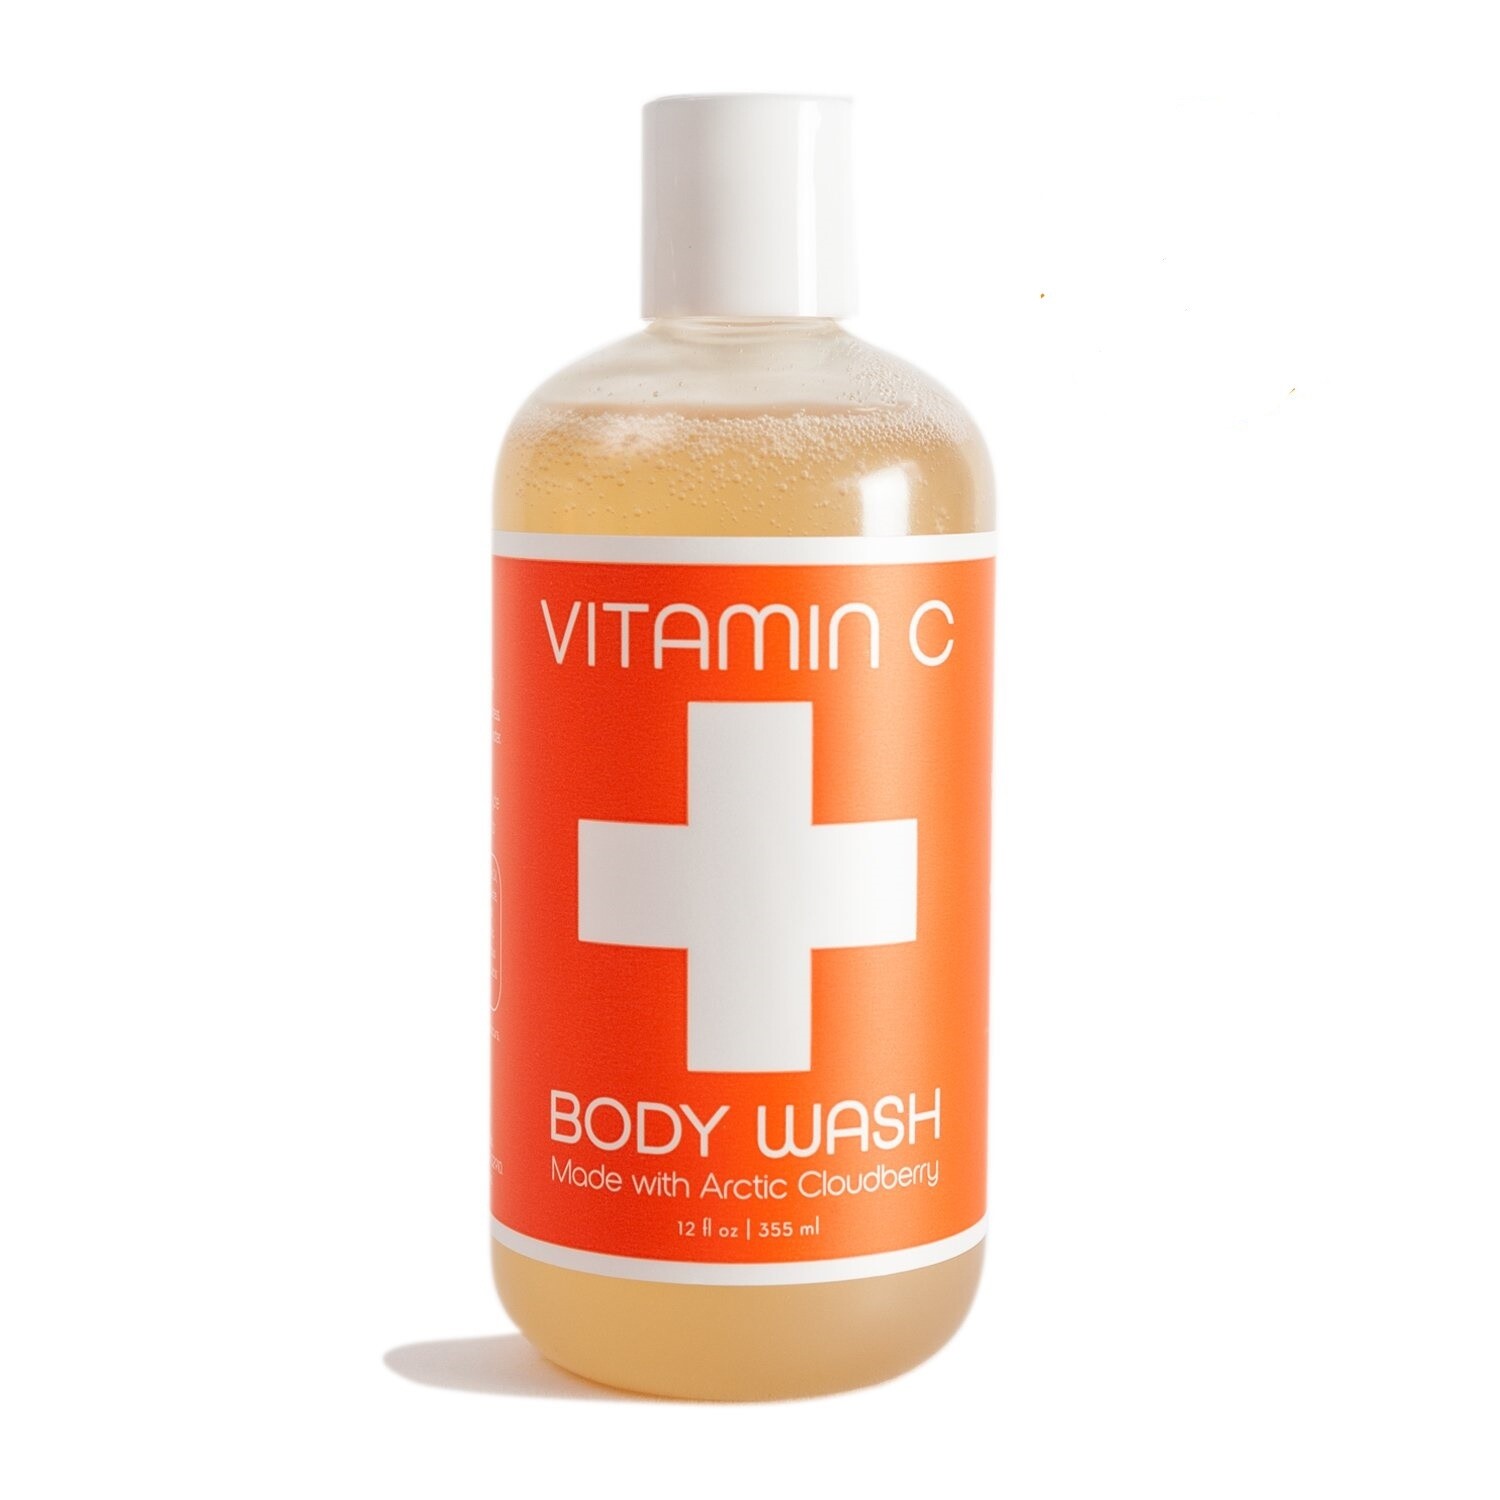 Kalastyle Nordic Wellness Vitamin C Body Wash